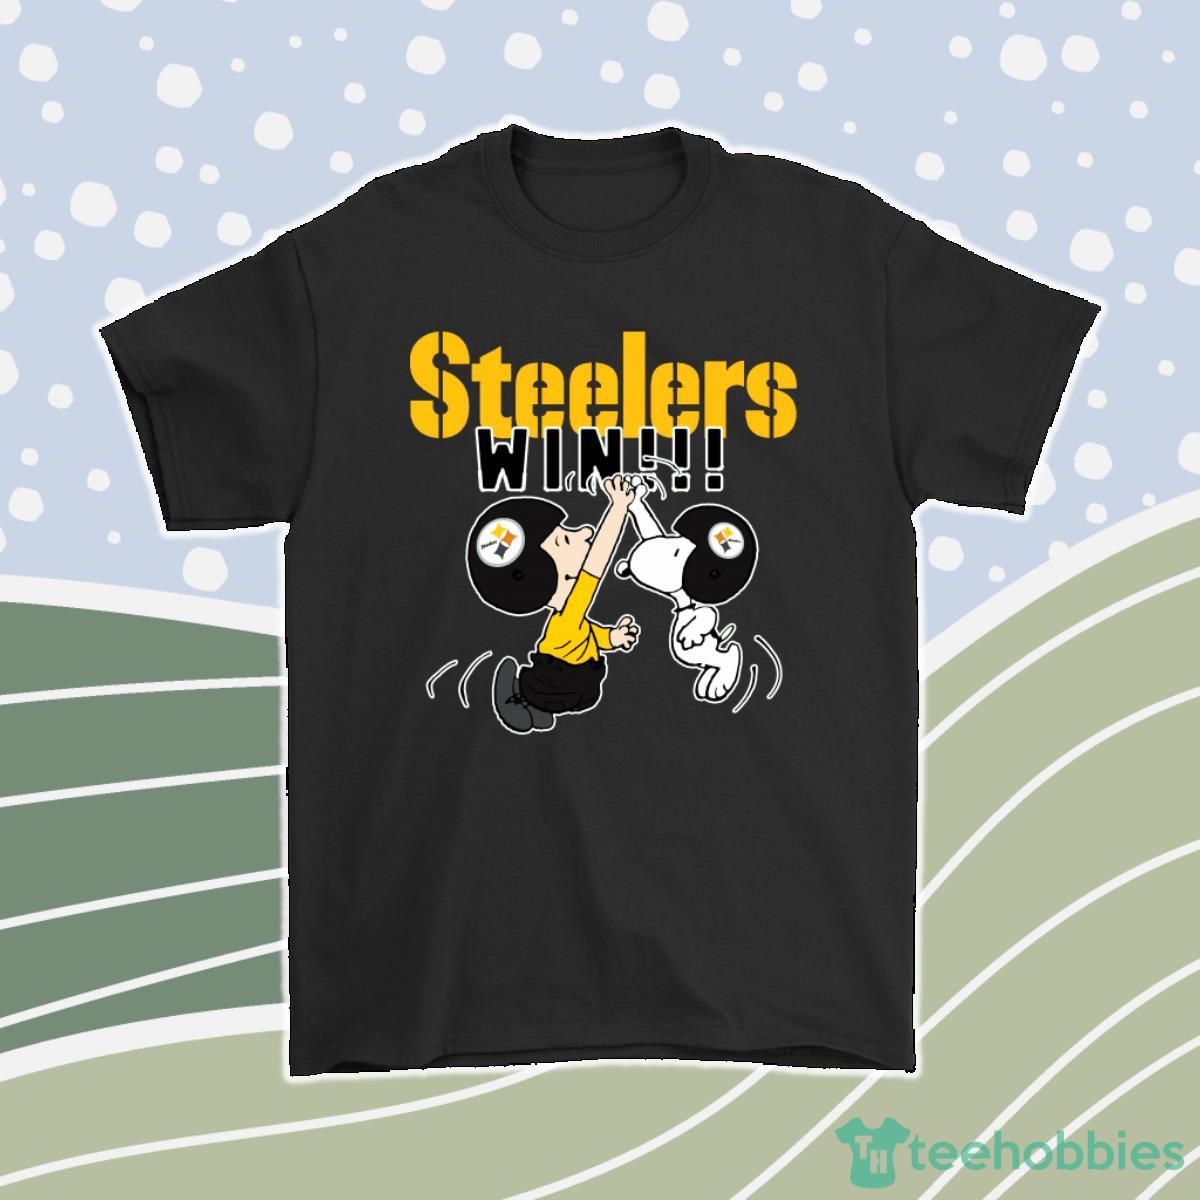 Charlie Snoopy High Five Pittsburgh Steelers Win Nfl Men Women T-Shirt, Hoodie, Sweatshirt Product Photo 1